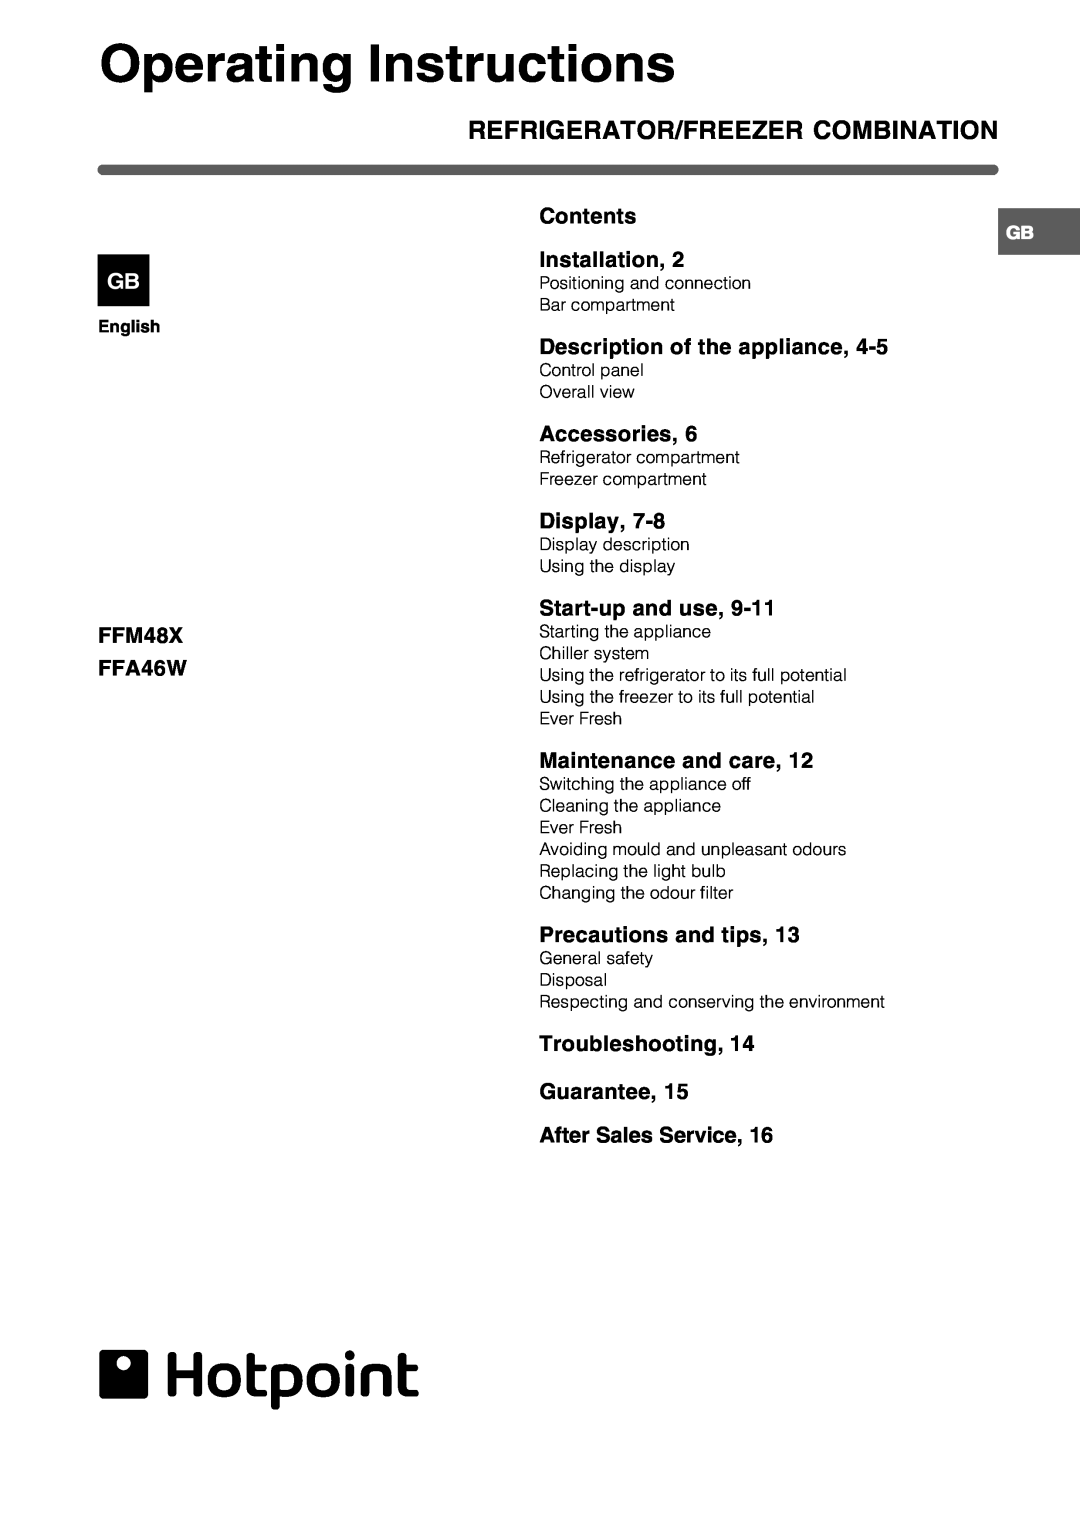 Hotpoint FFA46W, FFM48X manual Operating Instructions, Refrigerator/Freezer Combination 